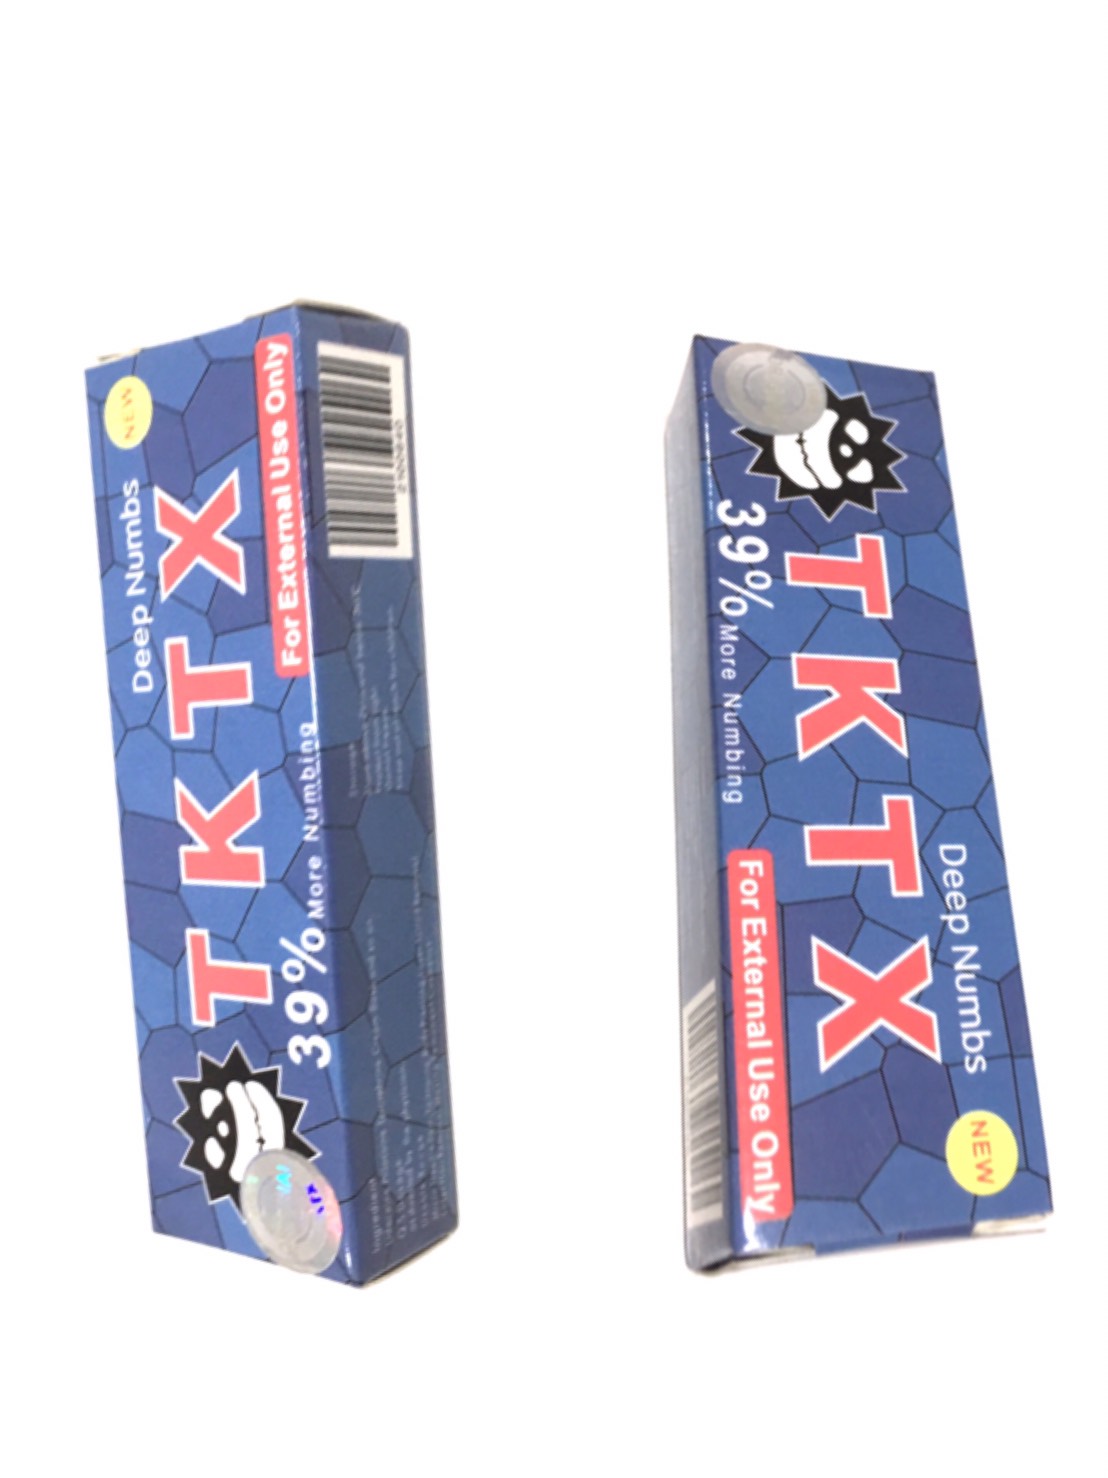 TKTX 39% สีน้ำเงิน [เซต 2 หลอด -ไม่แถม ครีมบำรุง-] ของแท้ TKTXOFFICIAL มาพร้อม ฉลากกันของปลอม ORIGINAL